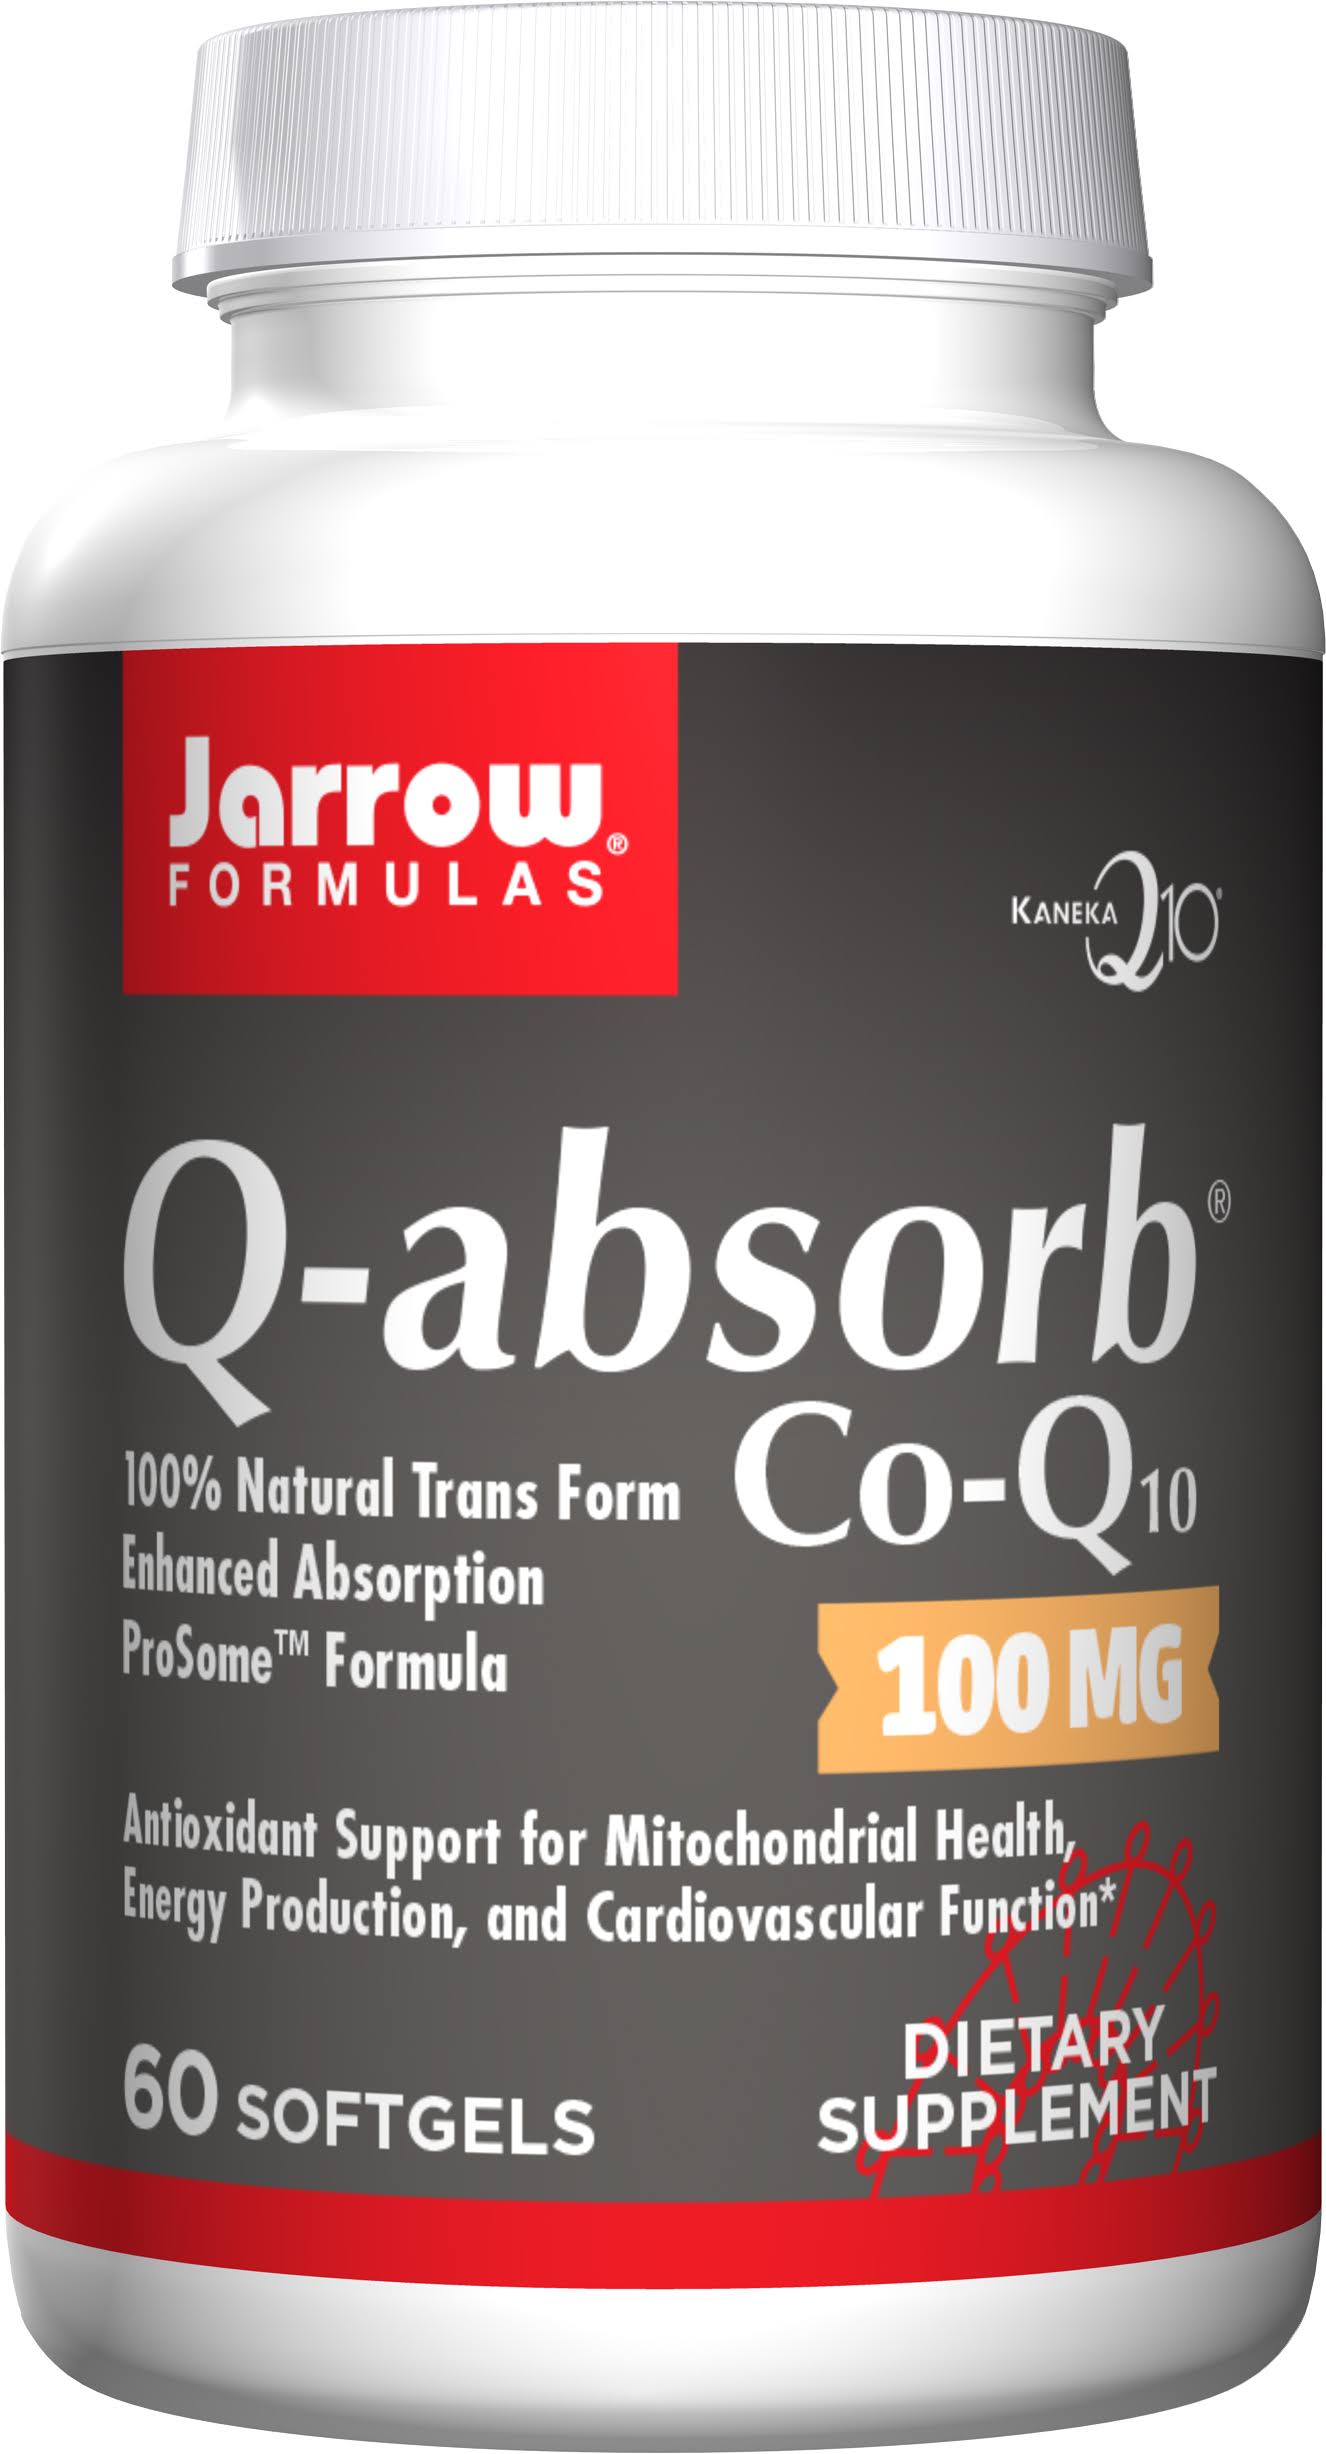 Jarrow Formulas Q-Absorb Co-Q10 - 100mg, 60ct